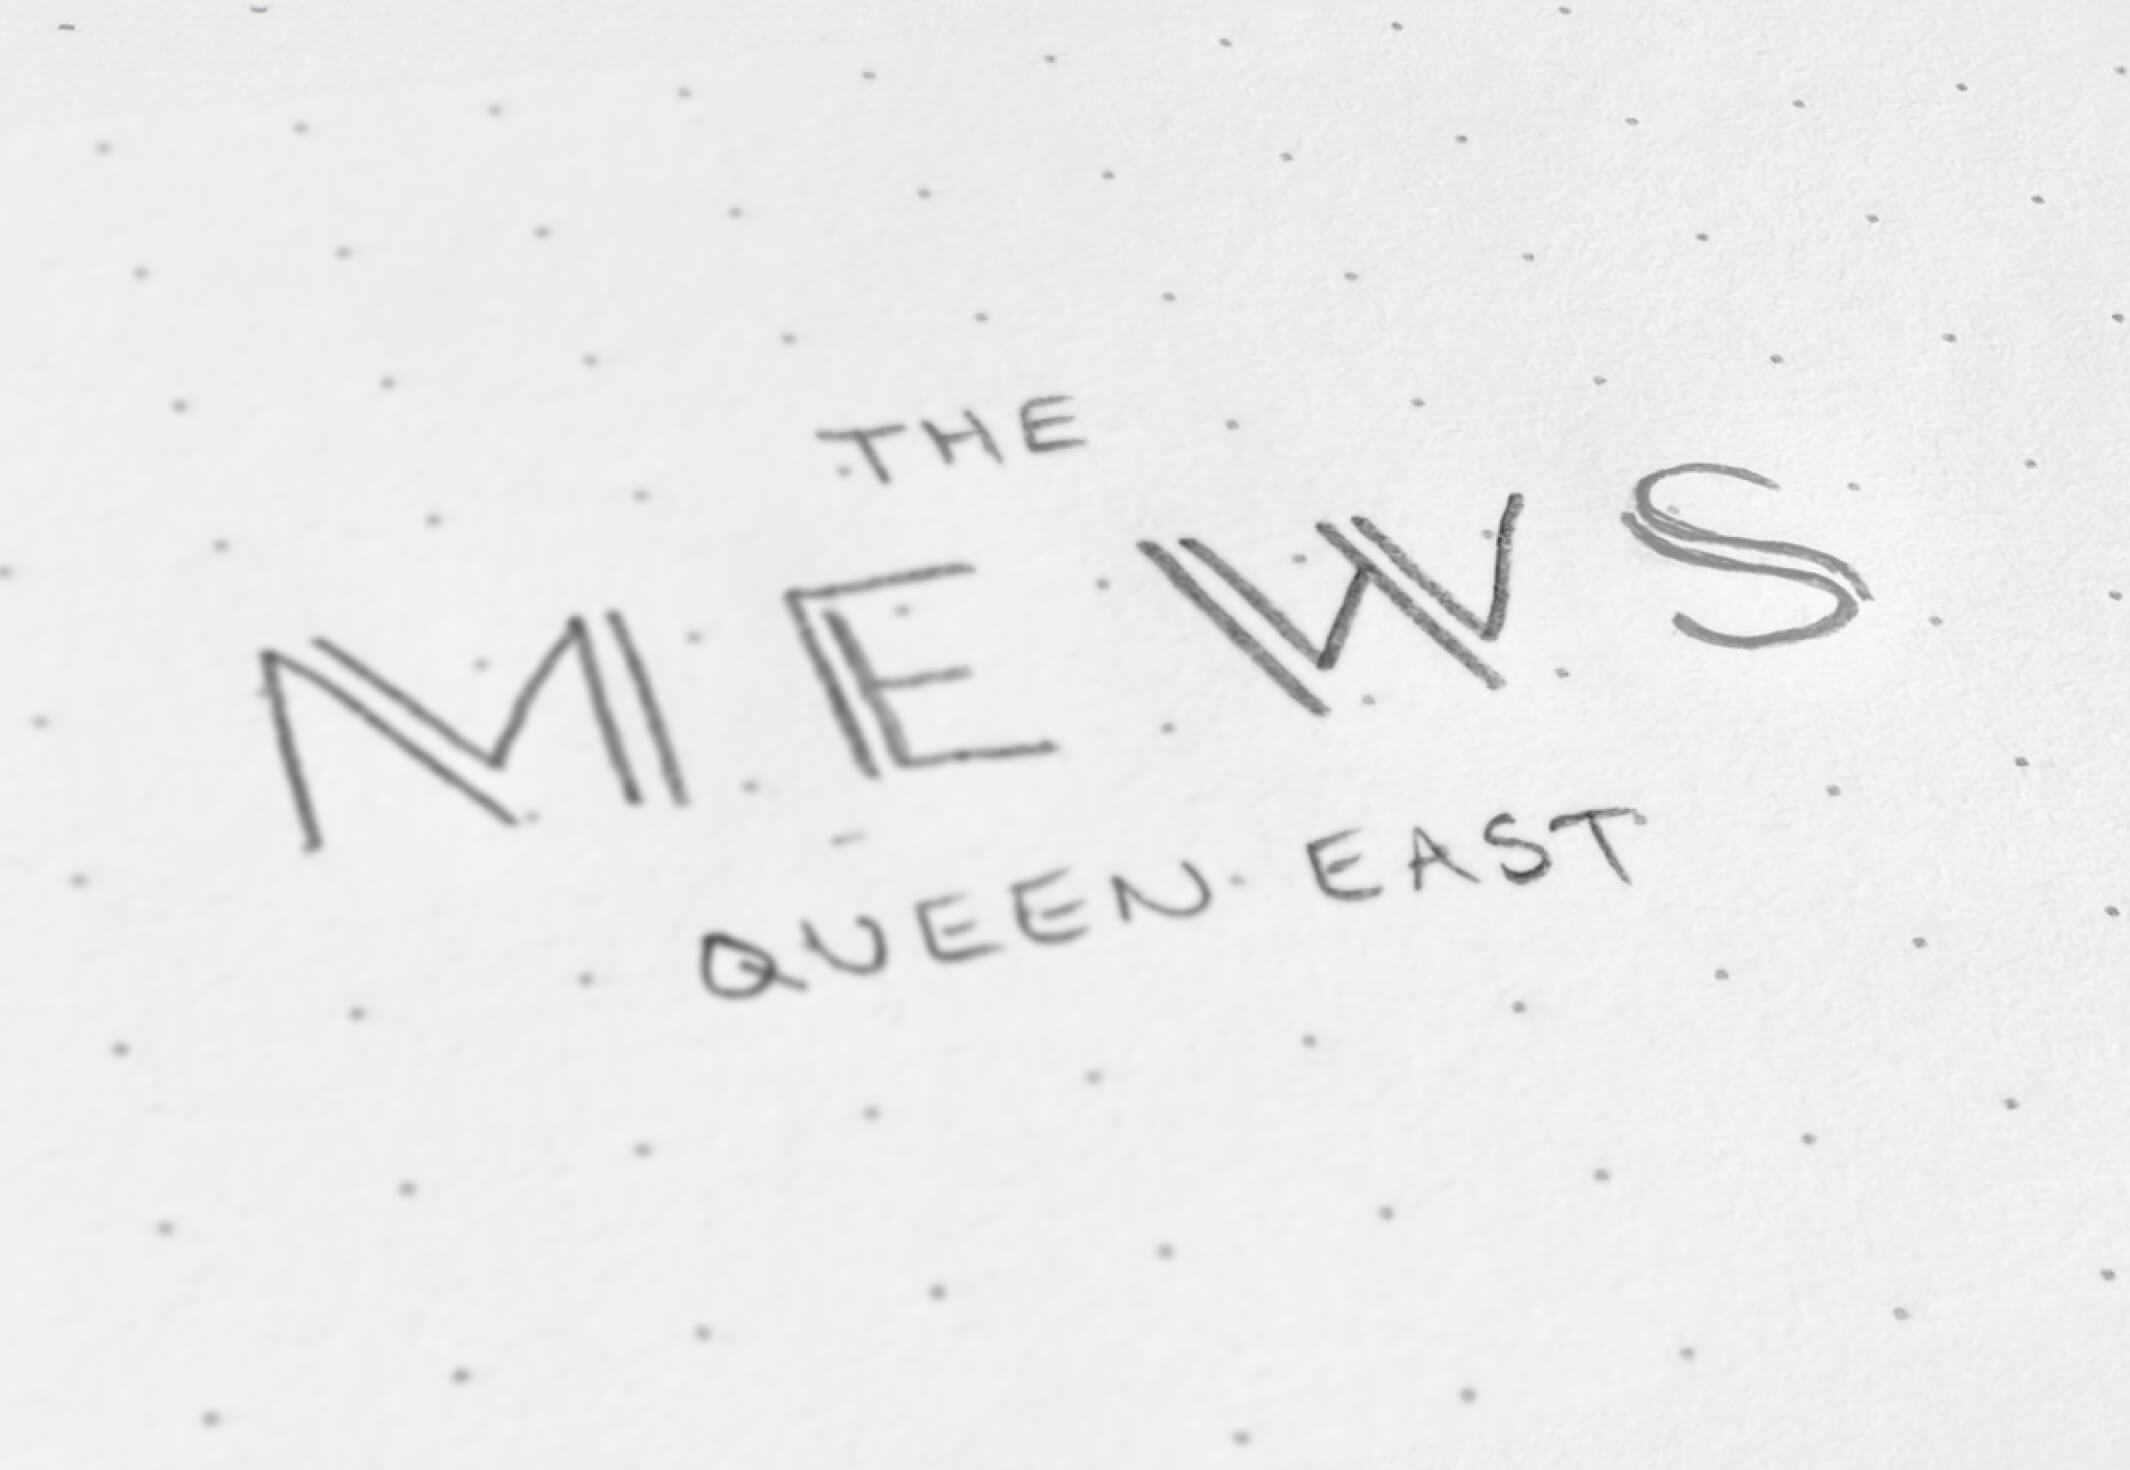 A preliminary logo sketch for The Mews